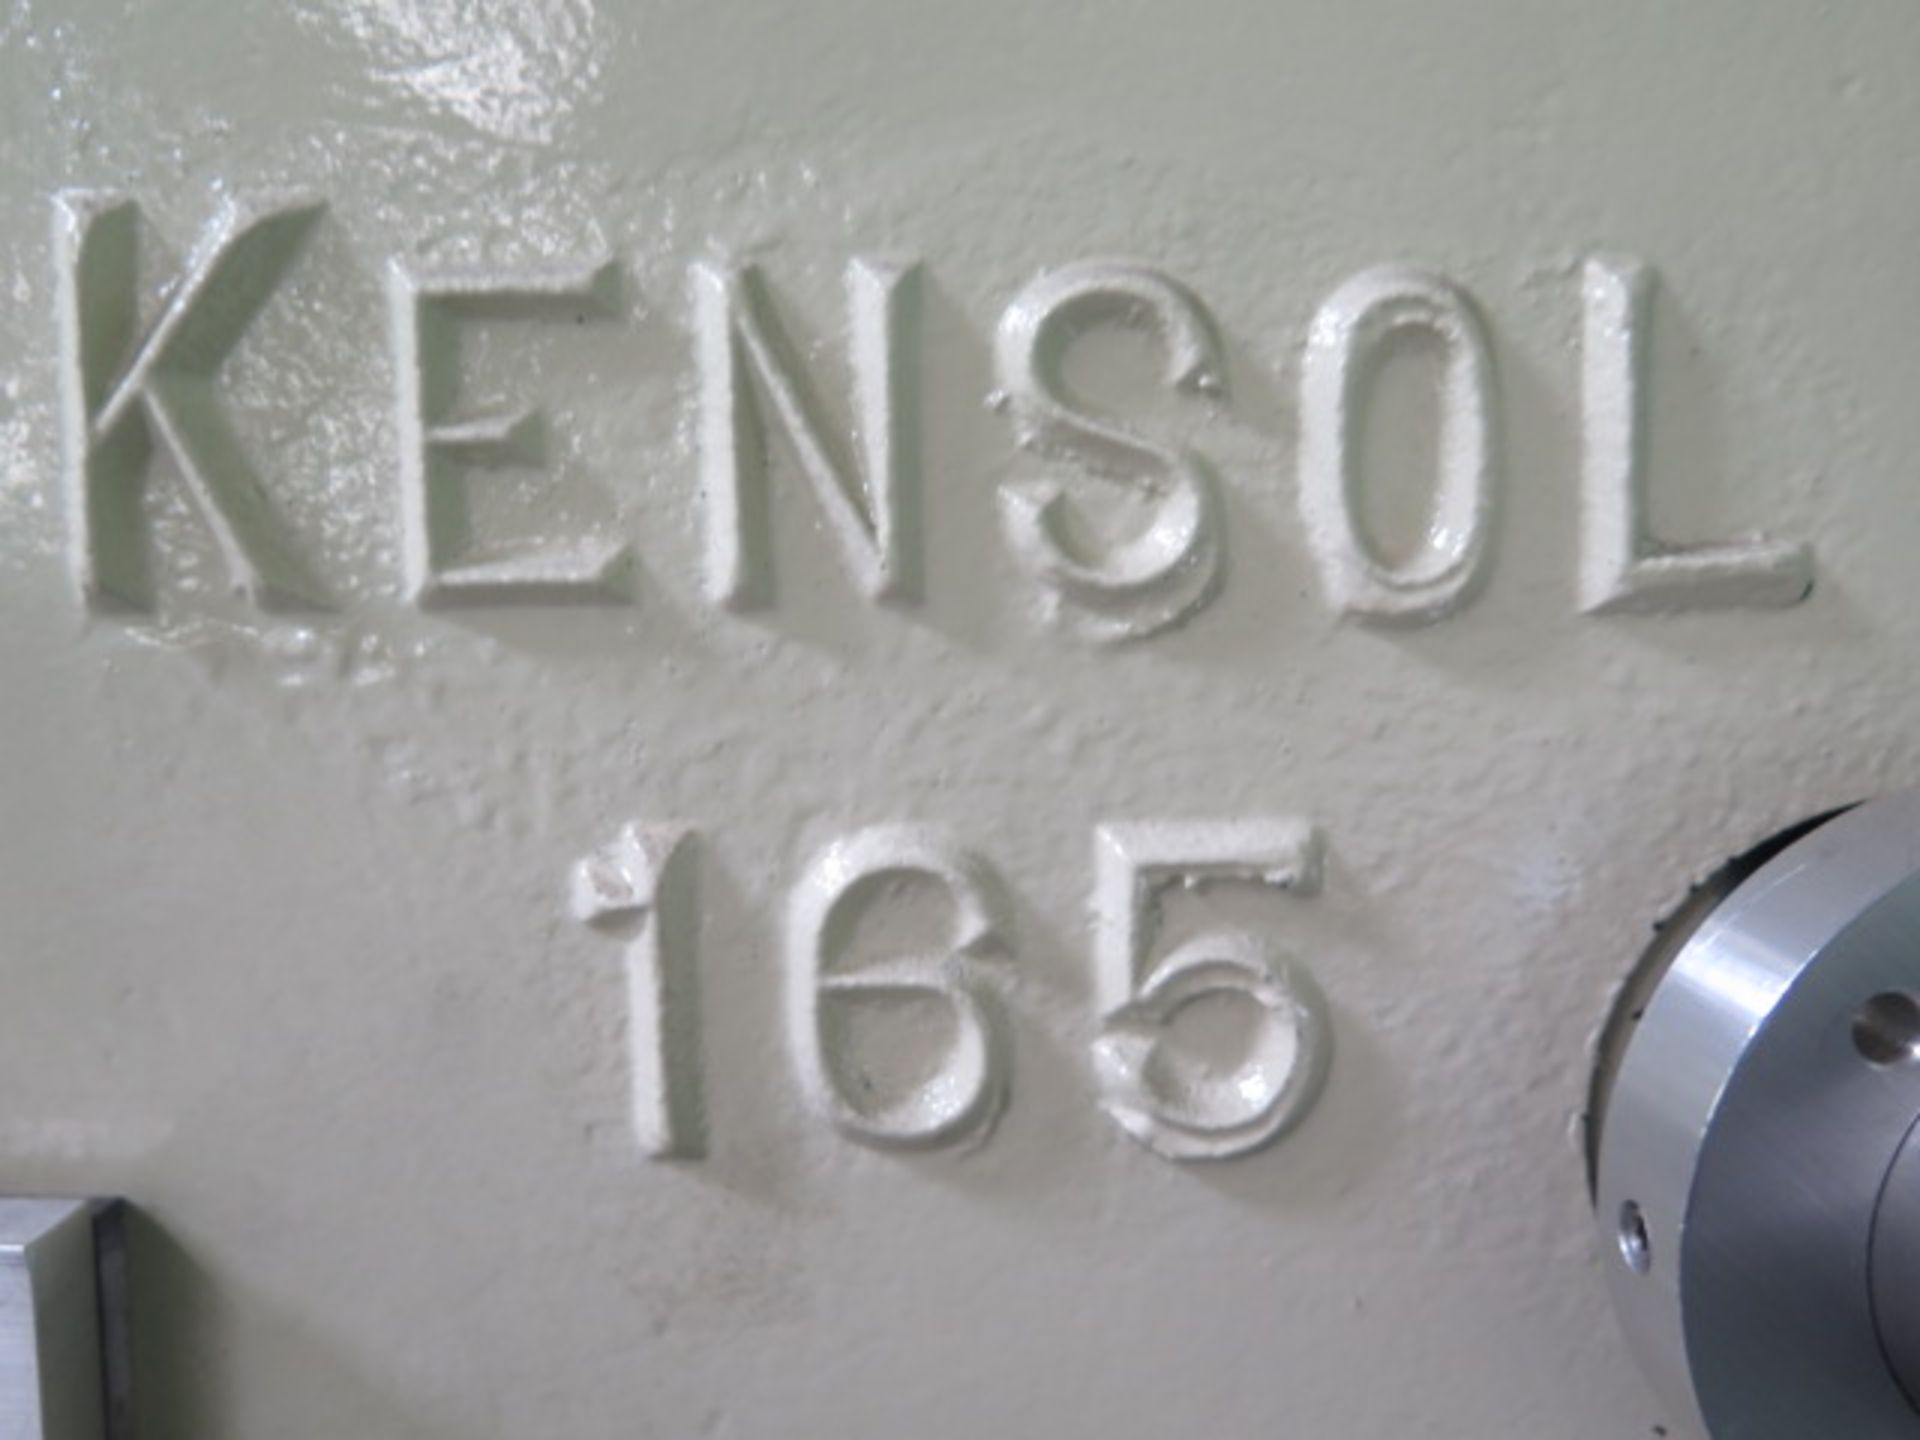 Kensol mmdl. 165 Roll Leaf Hot Stamping Press w/ PLC Controls - Image 8 of 9